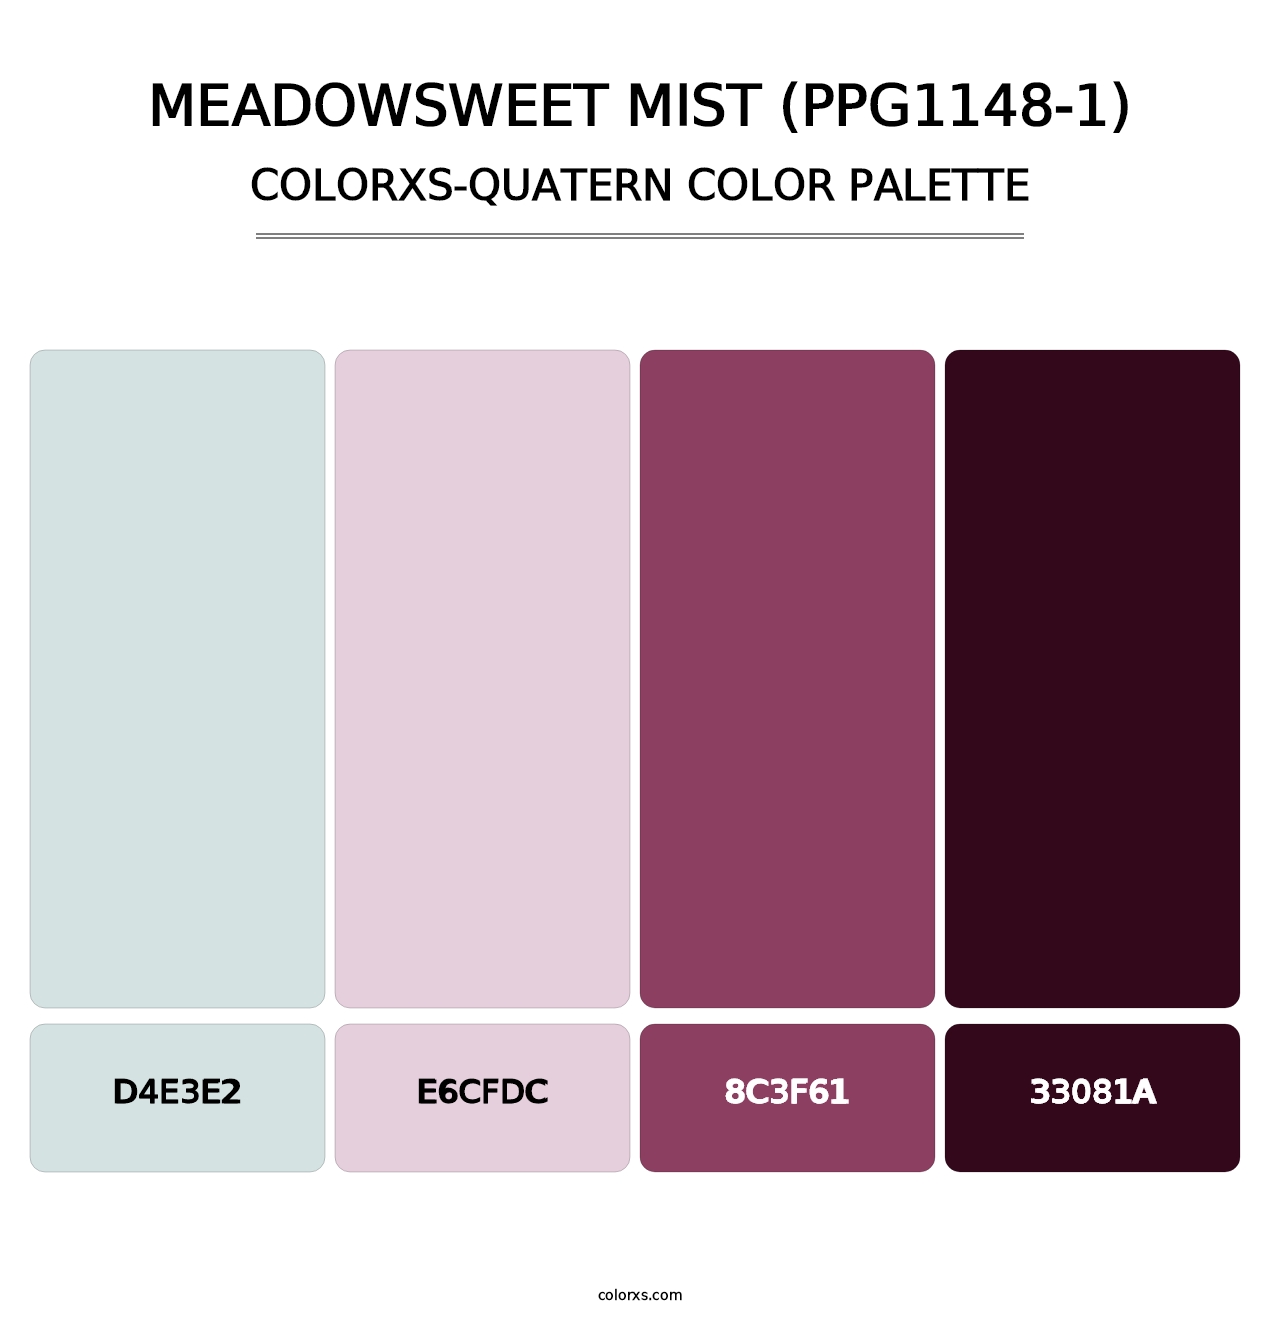 Meadowsweet Mist (PPG1148-1) - Colorxs Quatern Palette